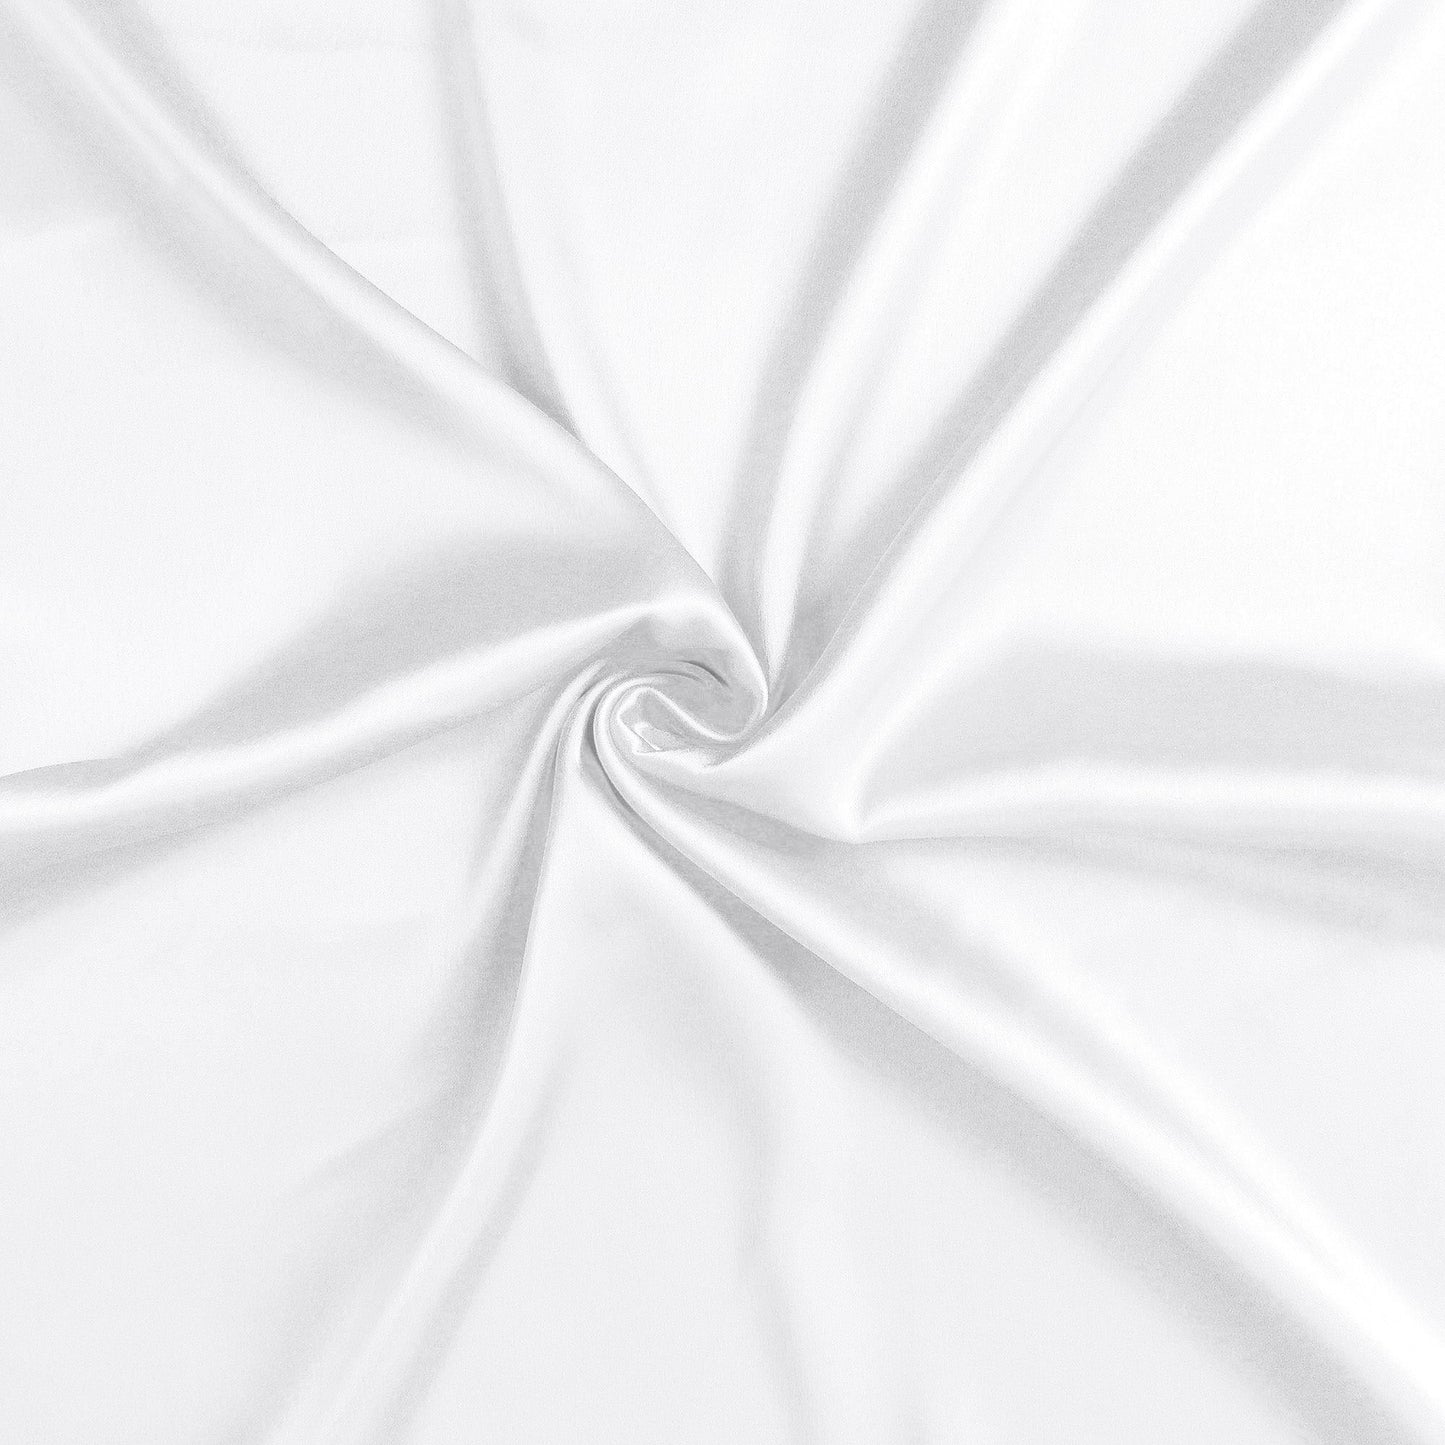 Luxury Soft Plain Satin Silk Pillowcases in Set of 2 - White